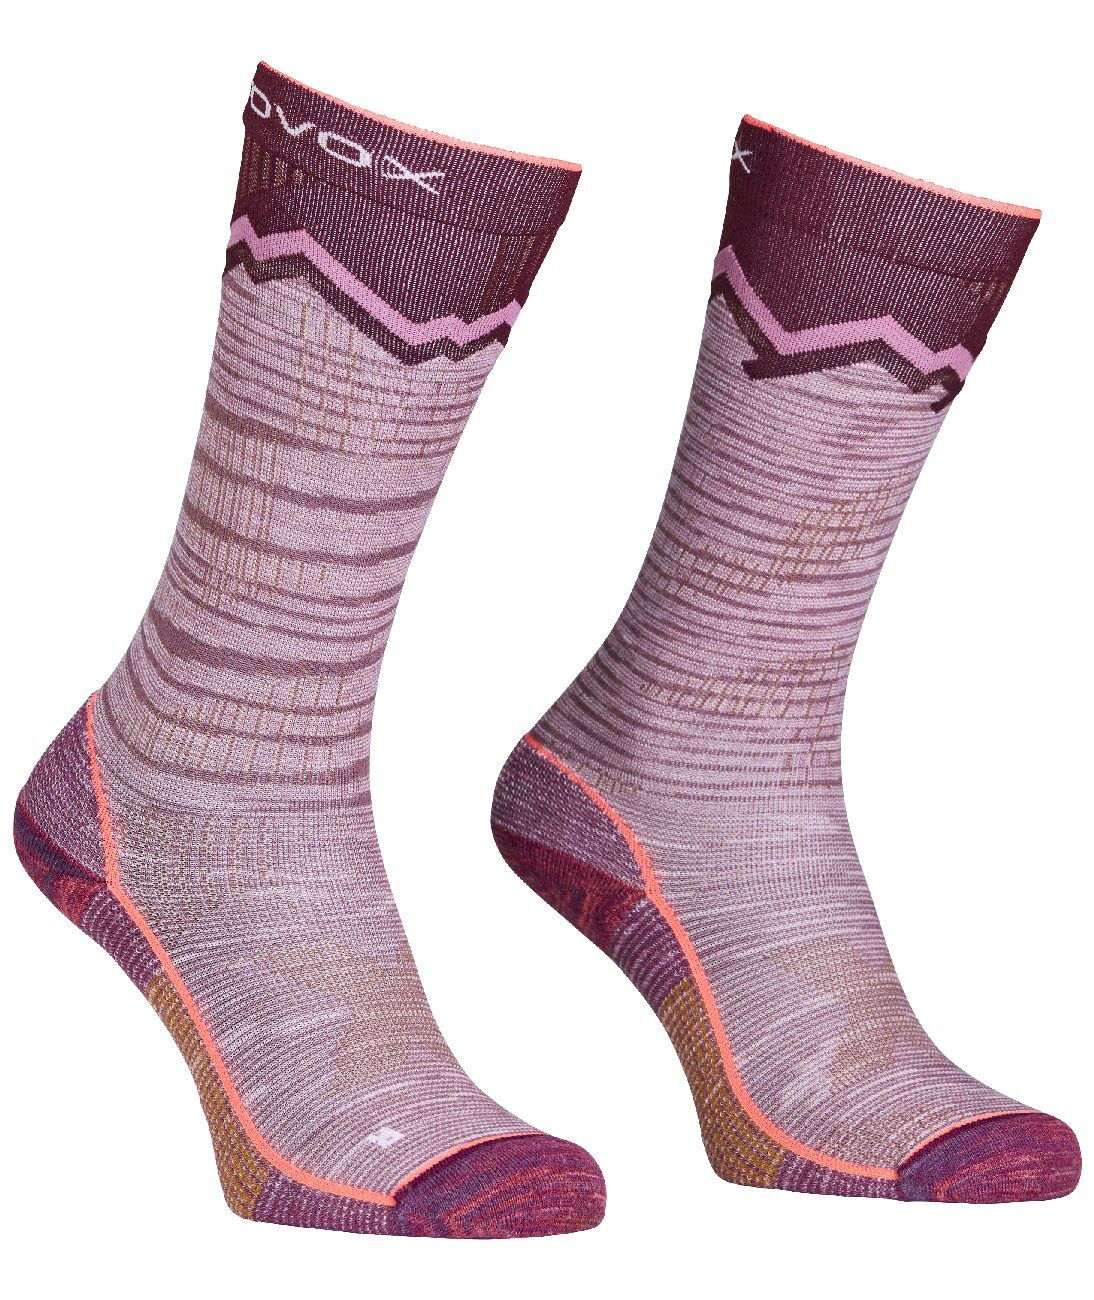 Ortovox Tour Long Socks - Ski socks - Women's